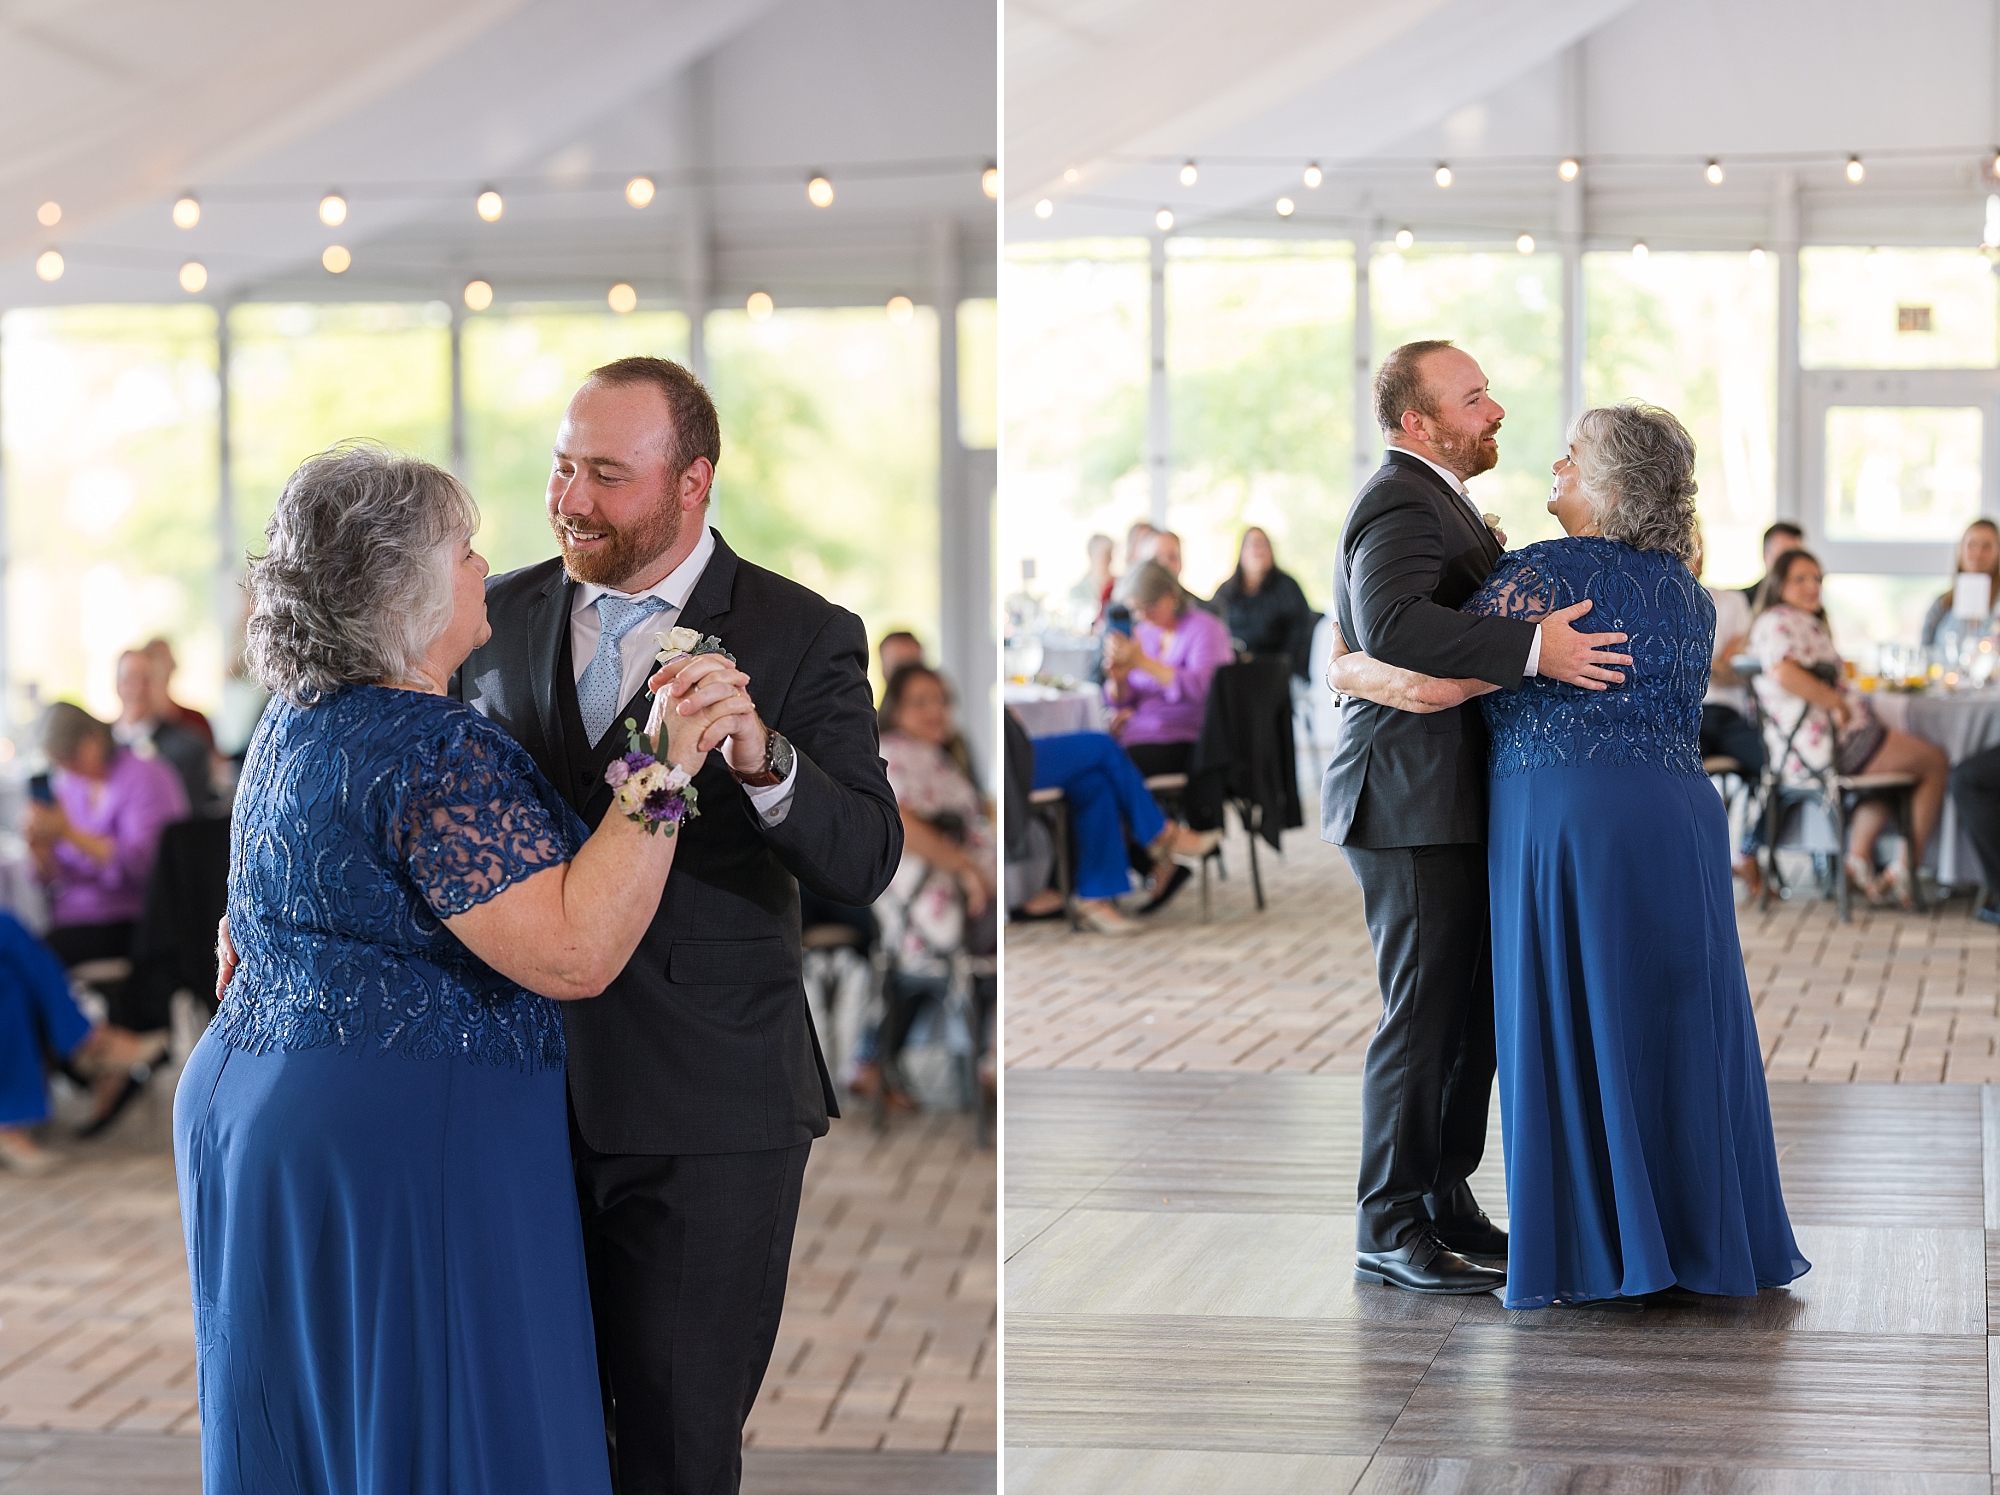 12 oaks mother son dance - Raleigh NC Wedding Photographer - Sarah Hinckley Photography